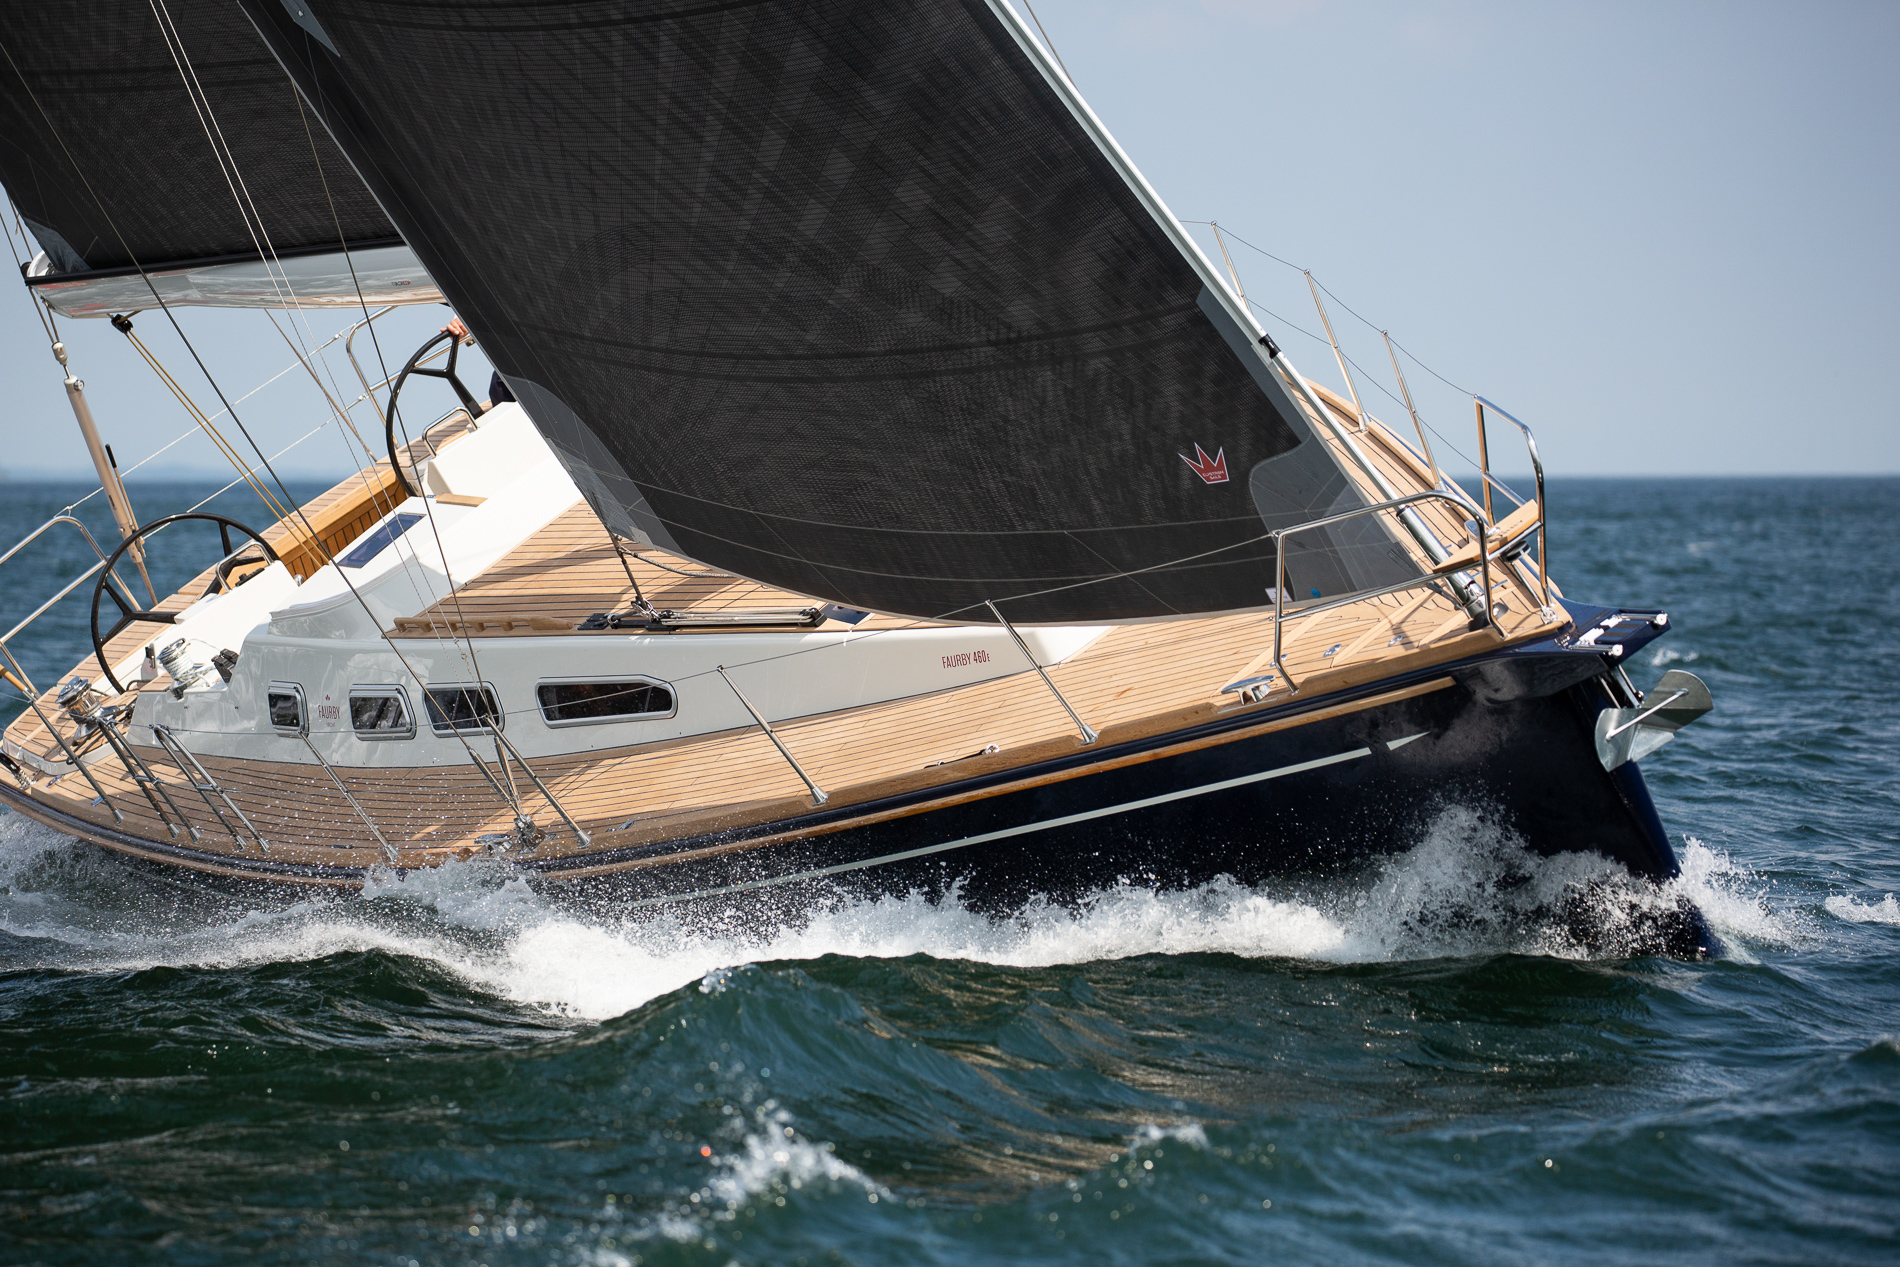 A brand new Faurby 460 sailing